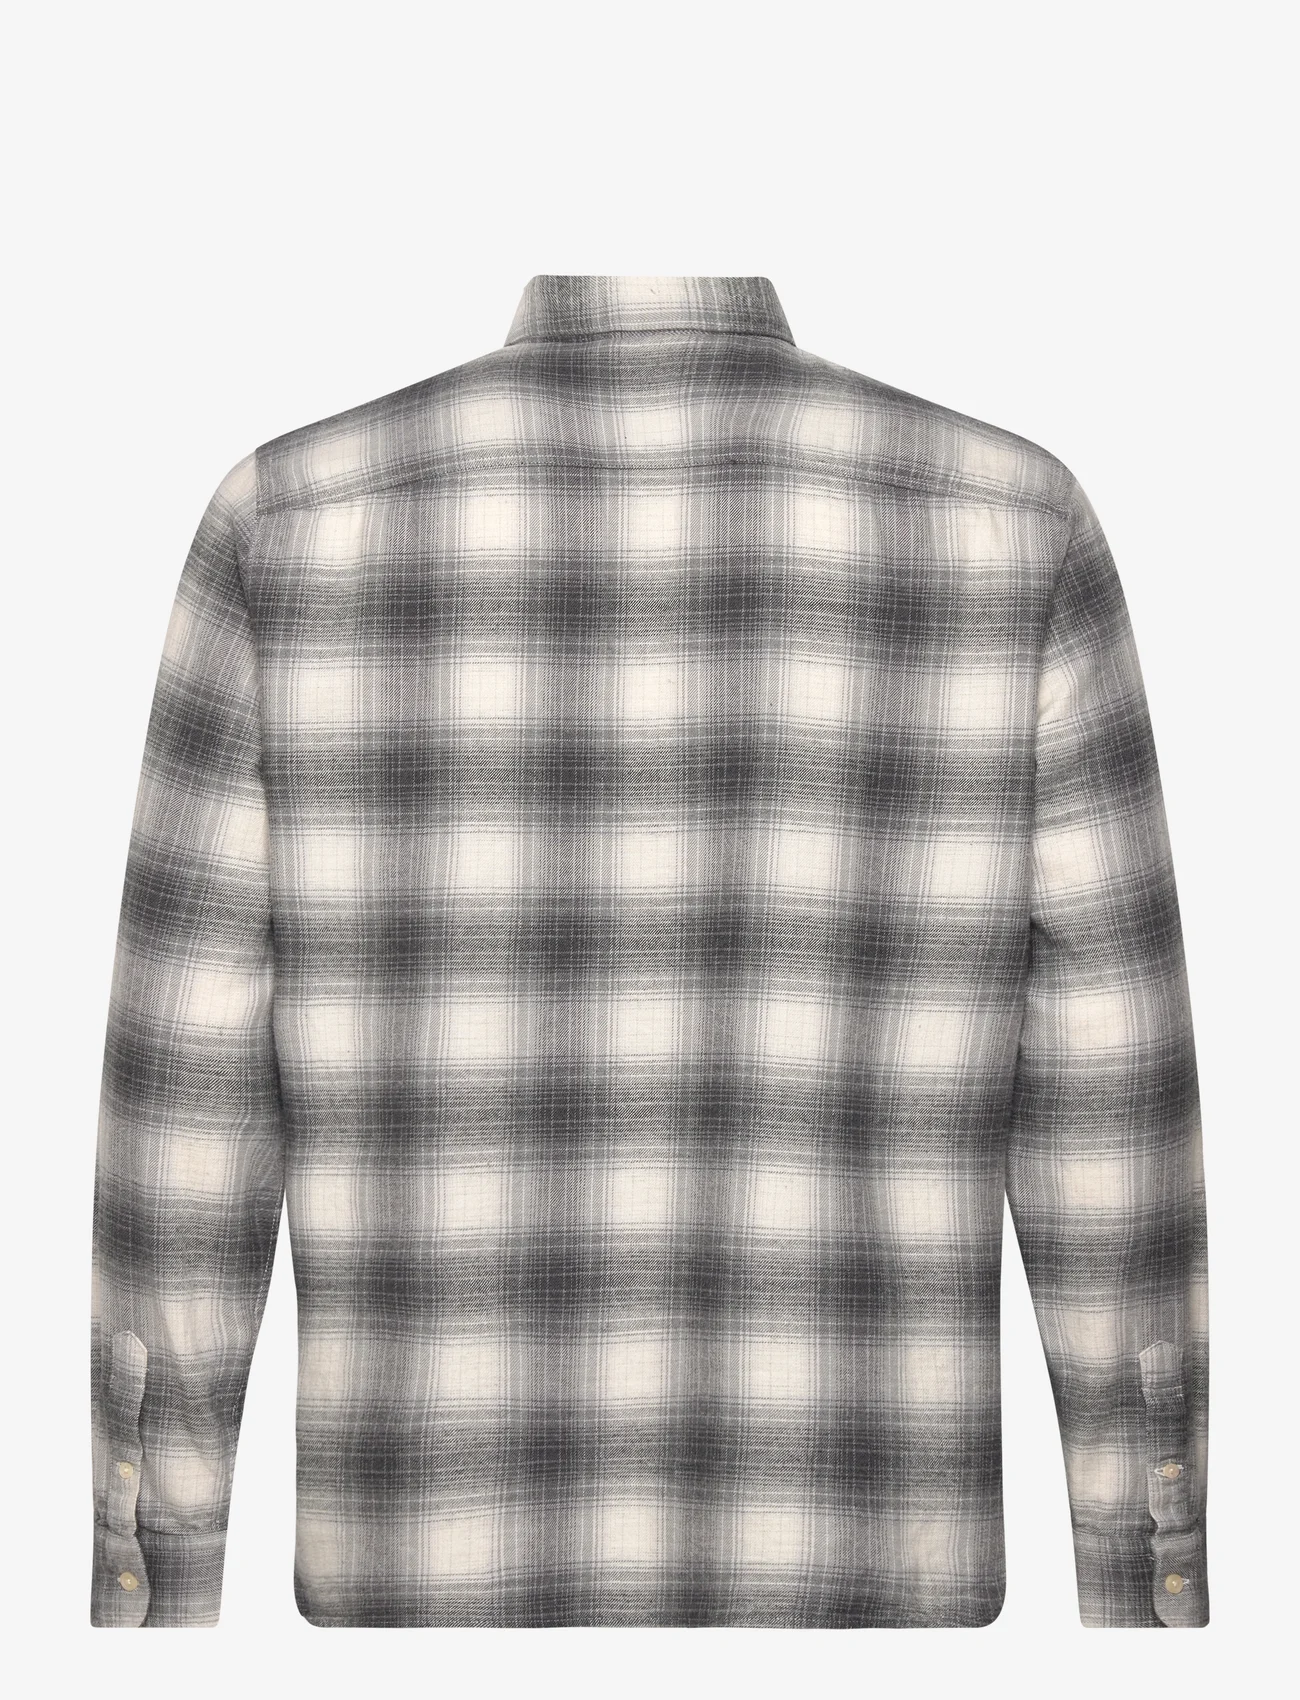 AllSaints - OMEGA LS SHIRT - languoti marškiniai - rock grey - 1